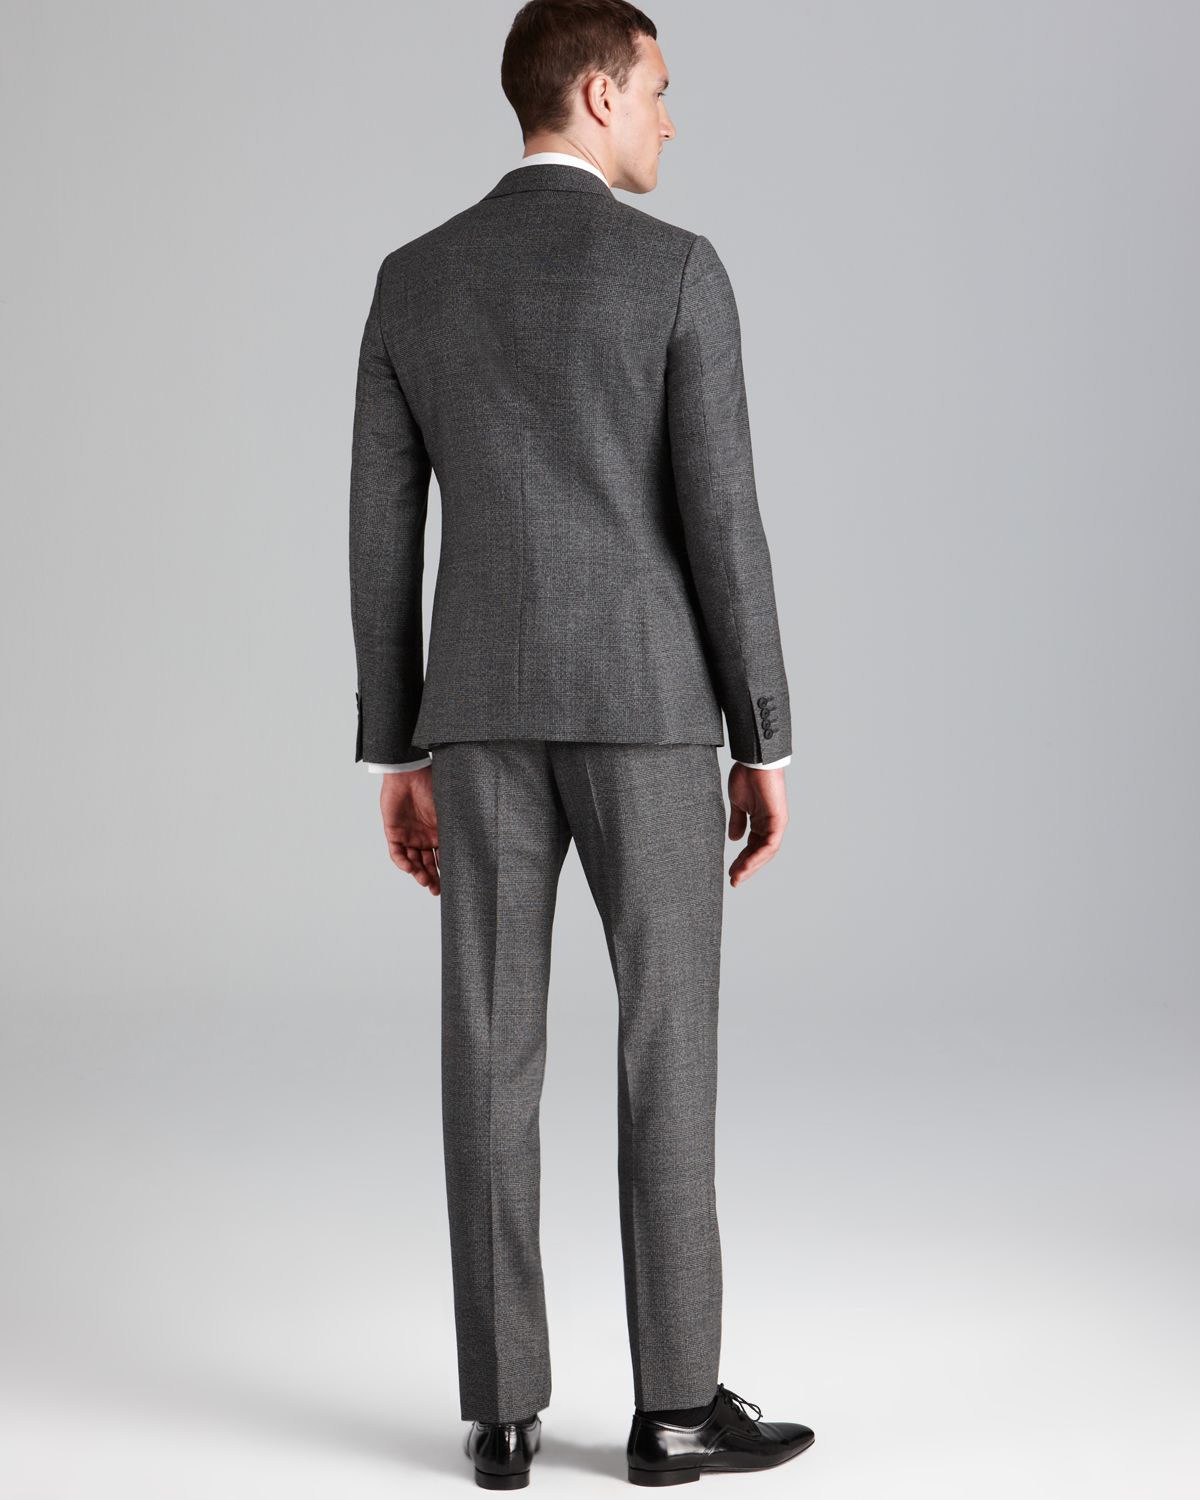 Lyst - Burberry London Sandhurst Glen Plaid Travel Suit Slim Fit in ...